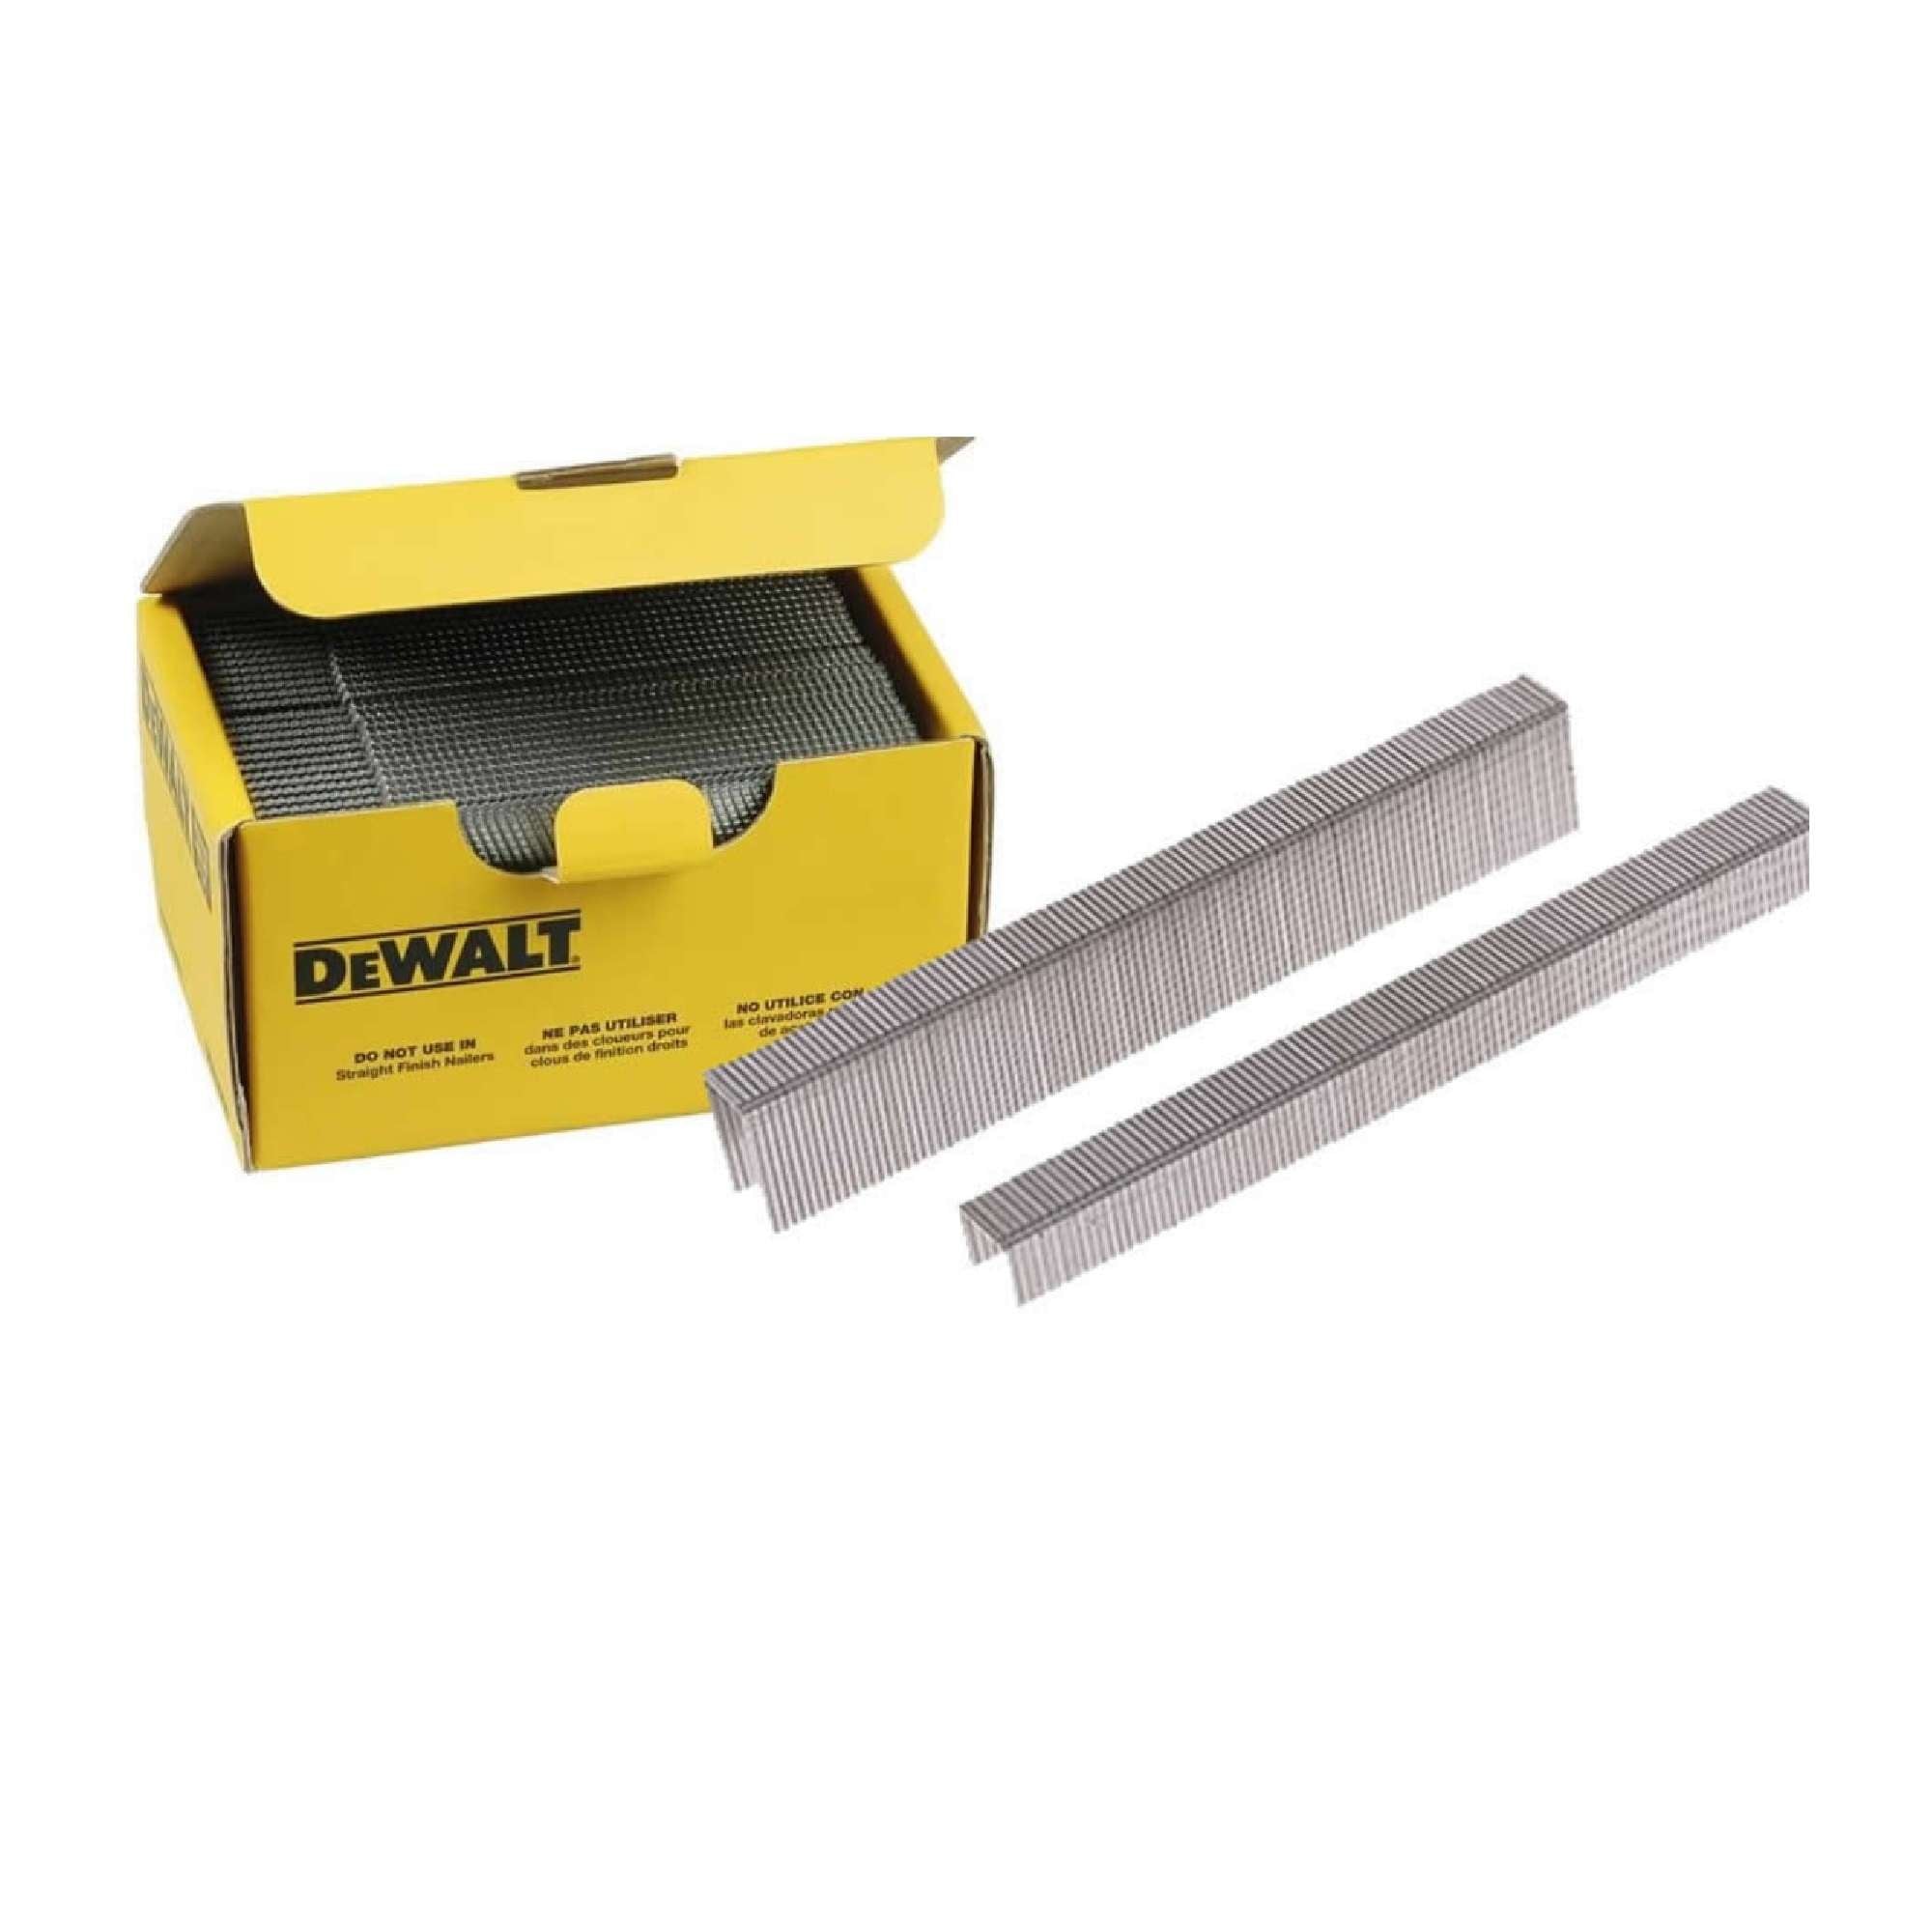 SX series 80 staples for nailers - Dewalt